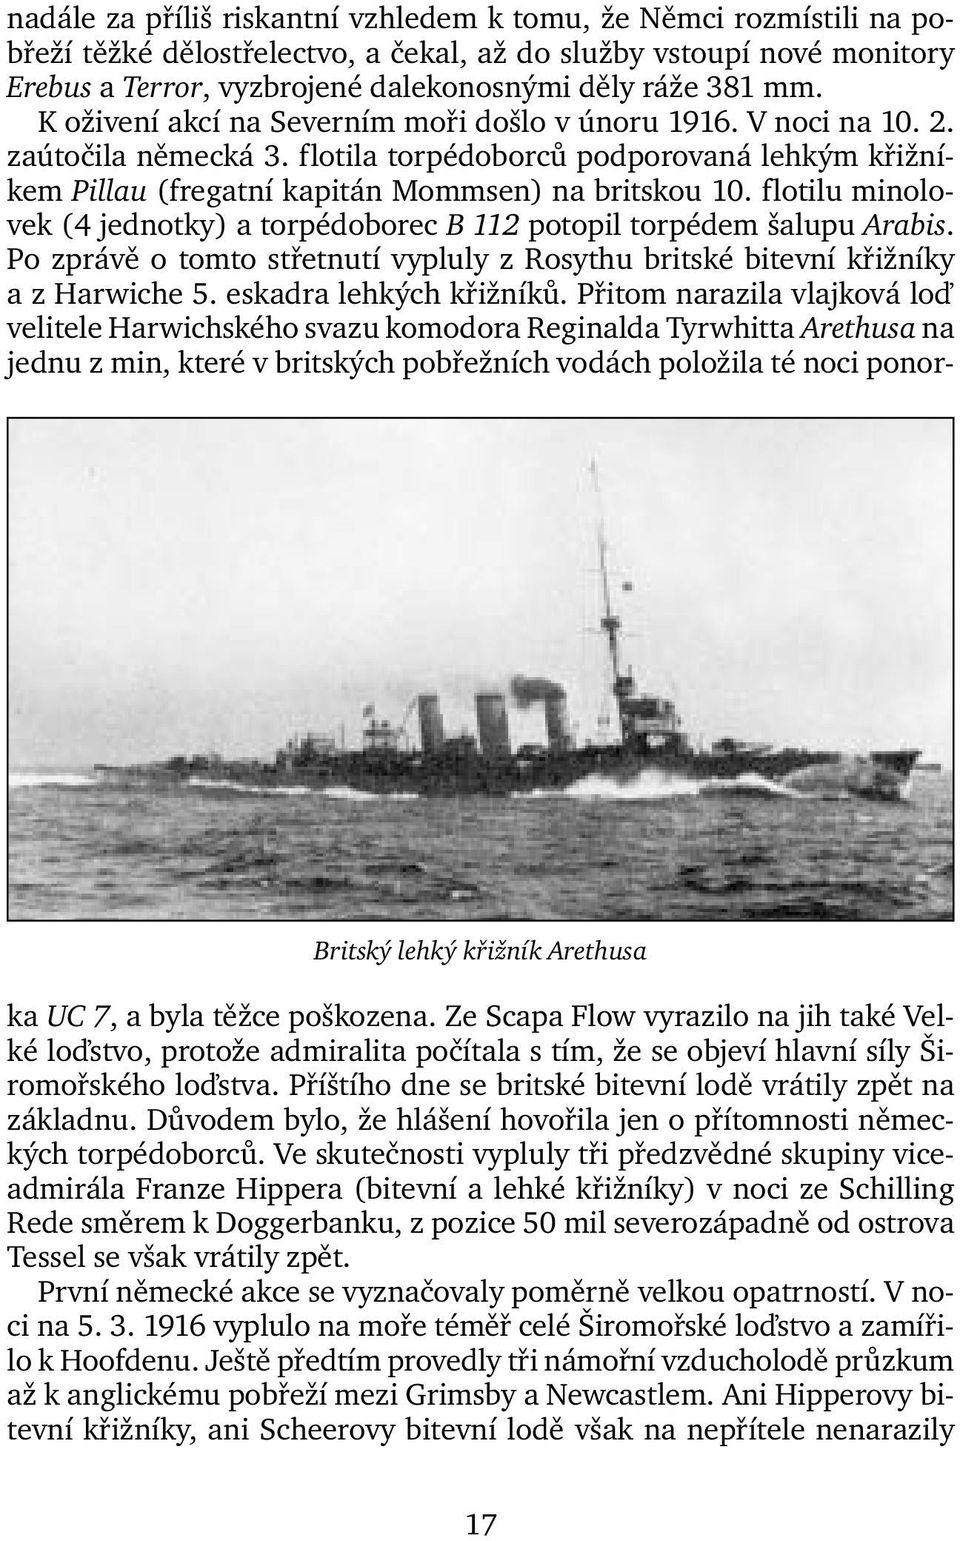 flotila torpédoborců podporovaná lehkým křižníkem Pillau (fregatní kapitán Mommsen) na britskou 10. flotilu minolovek (4 jednotky) a torpédoborec B 112 potopil torpédem šalupu Arabis.